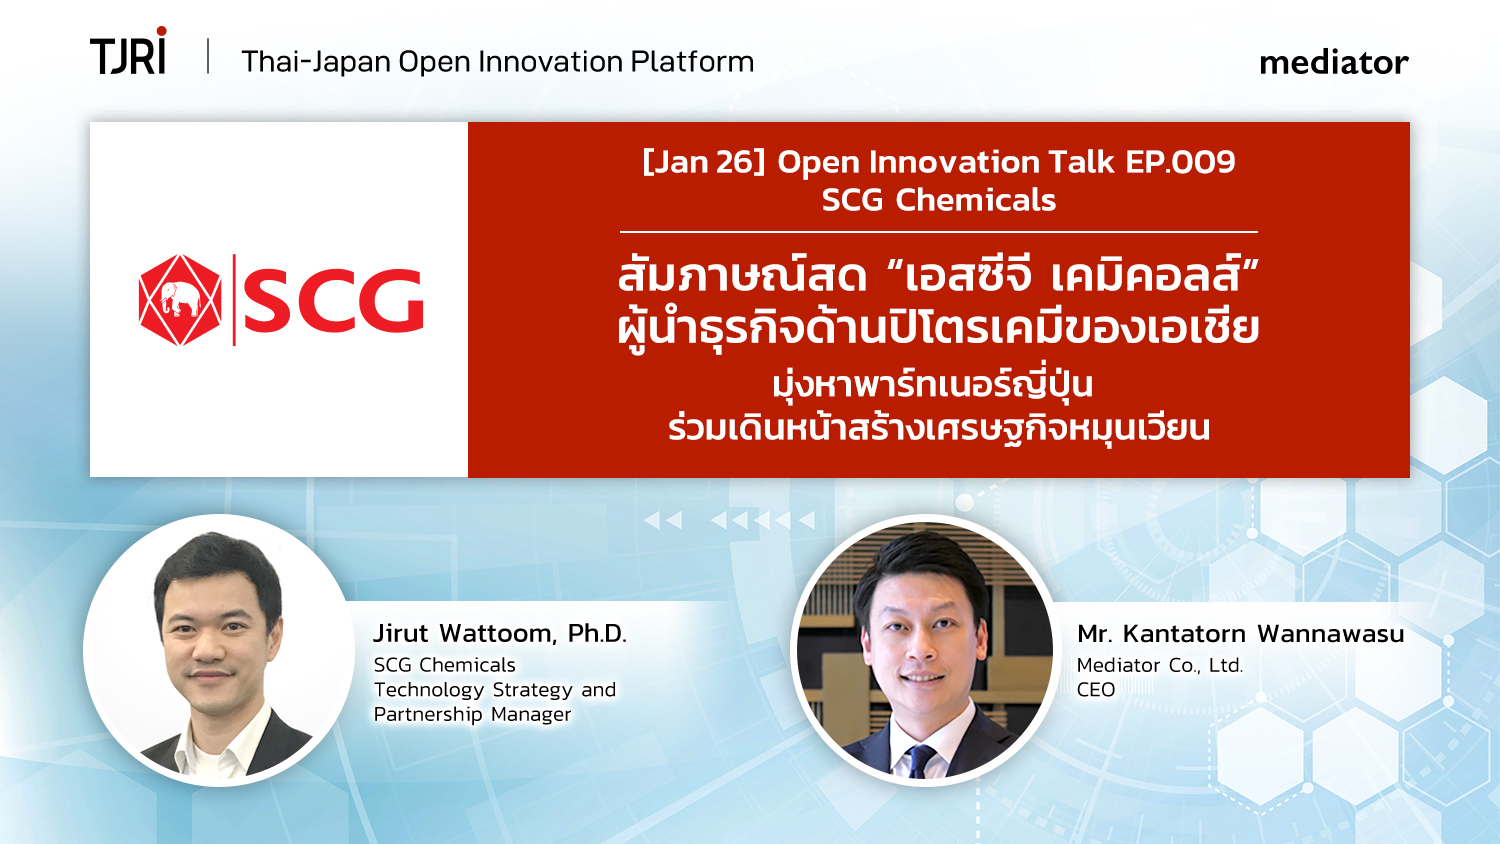 [Jan 26] Open Innovation Talk EP.009 | SCG Chemicalsのメイン画像